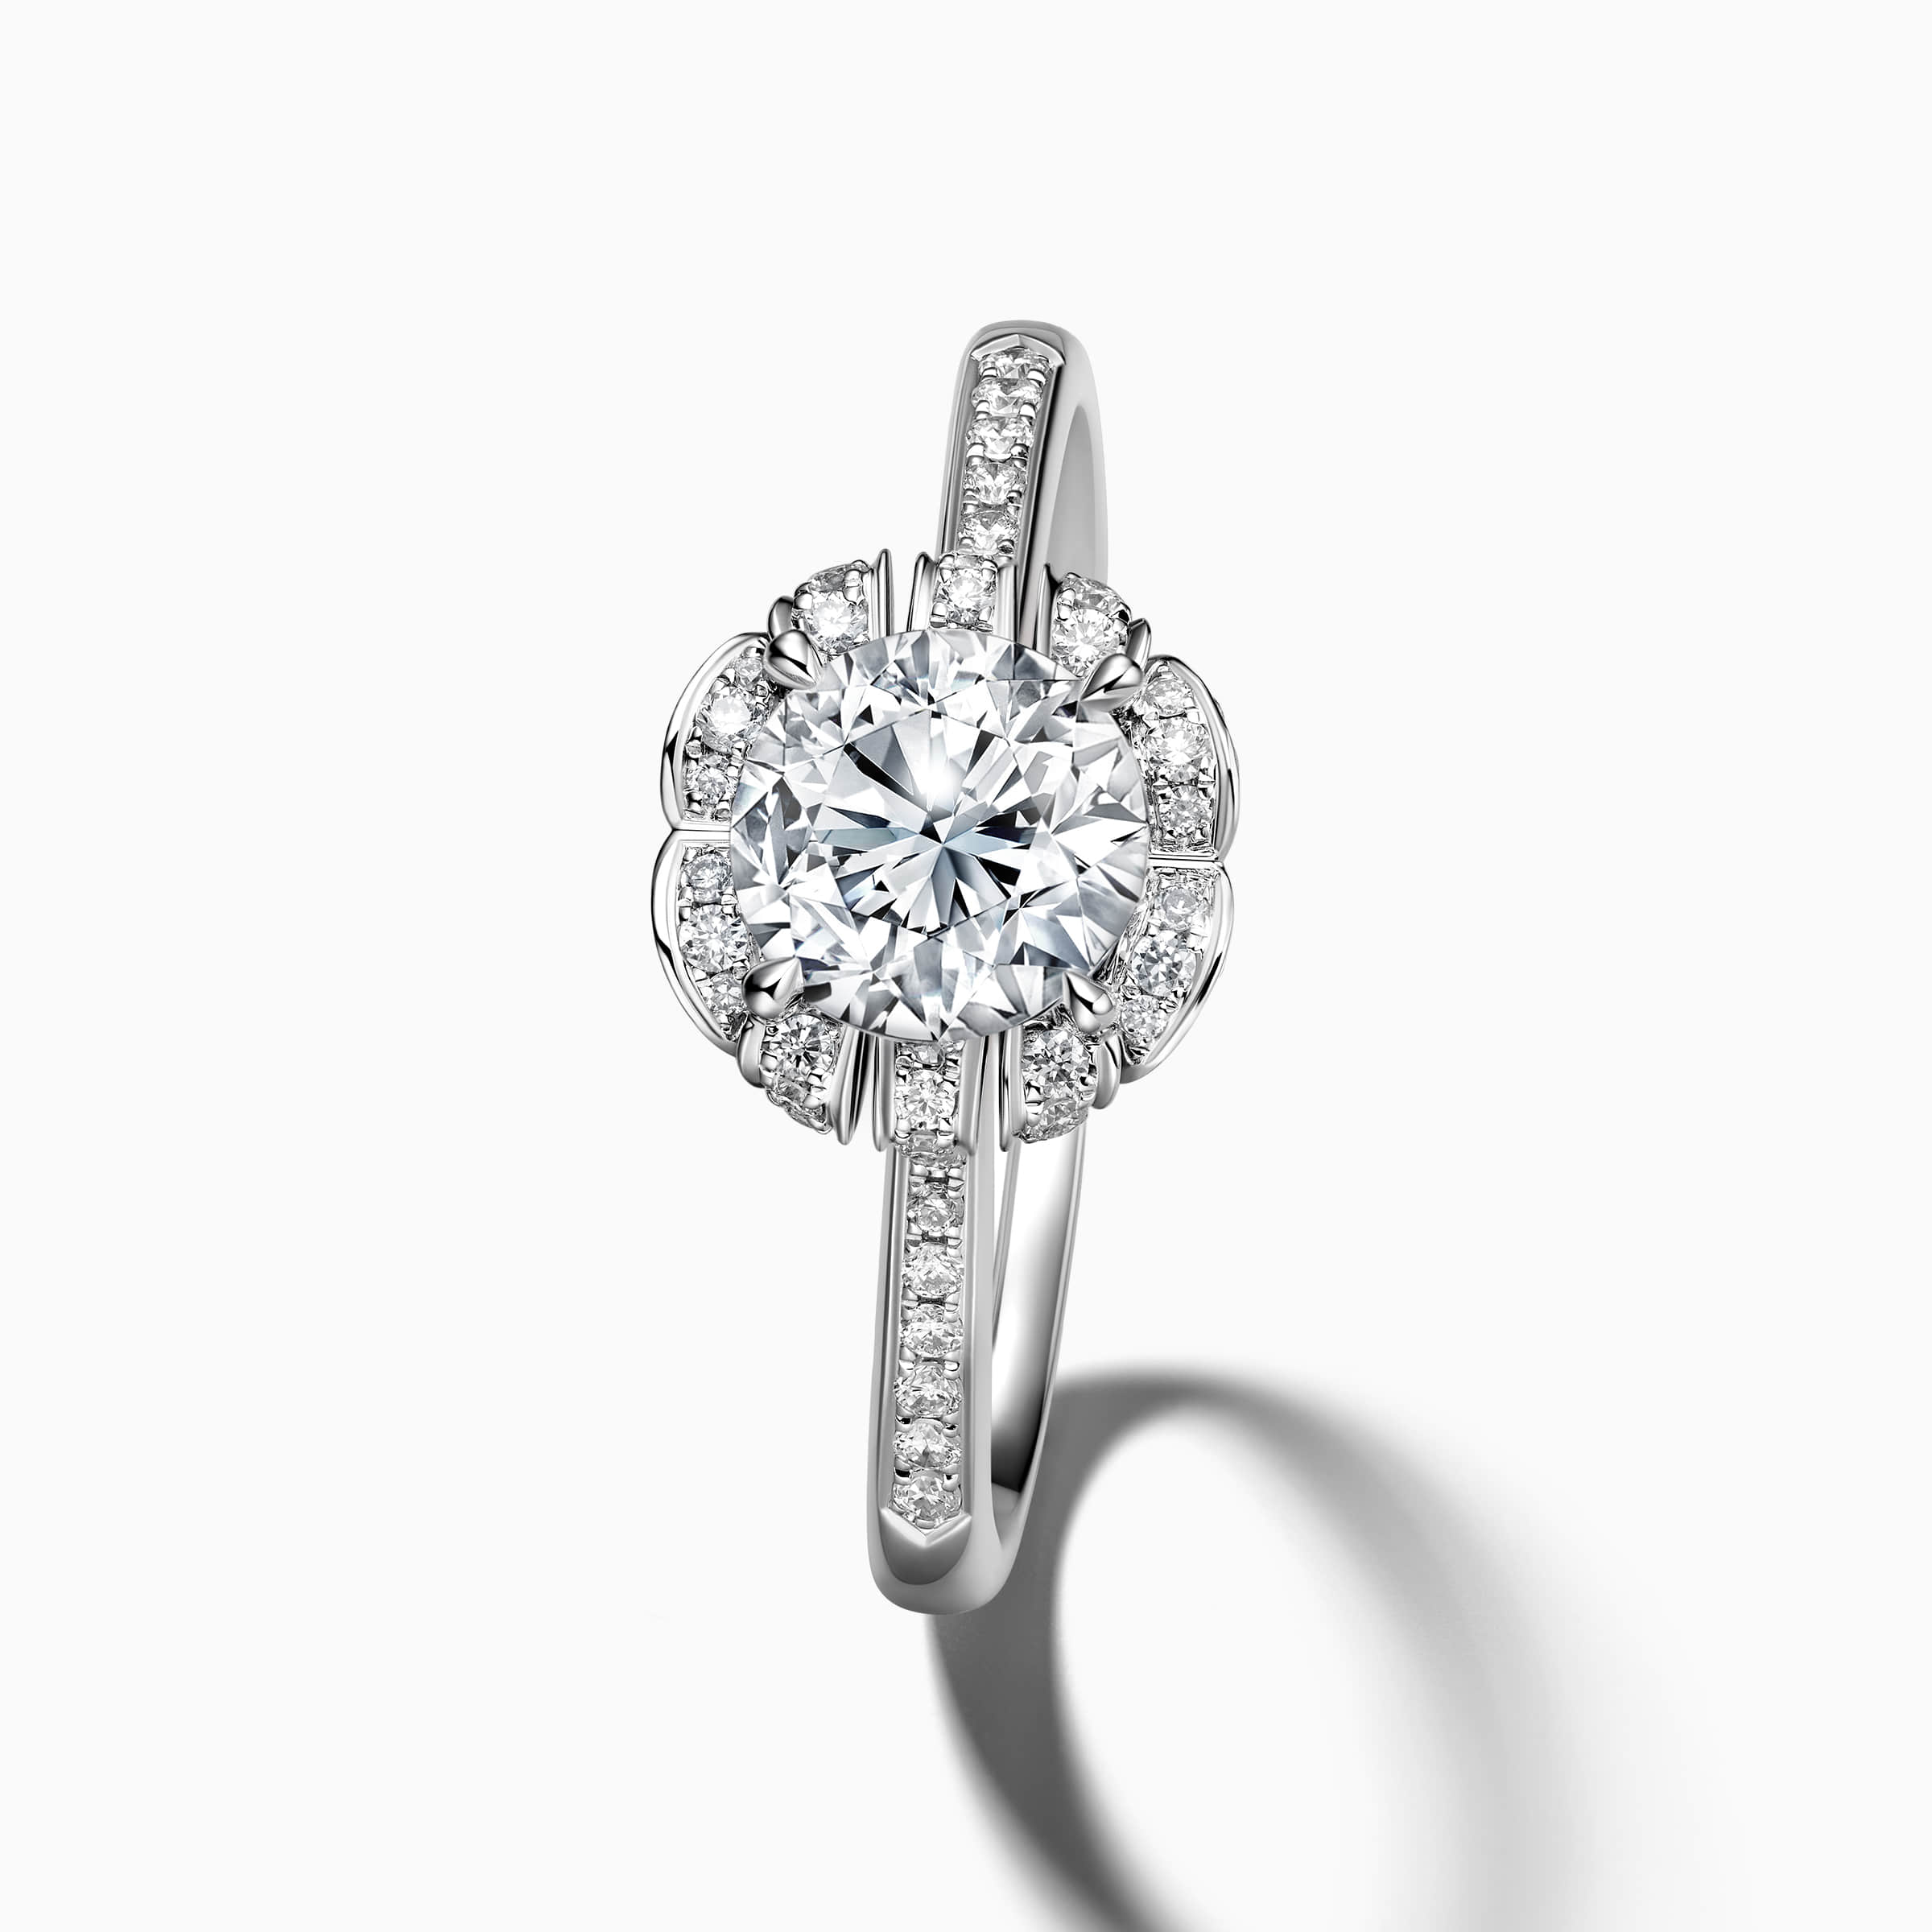 Darry Ring designer engagement ring